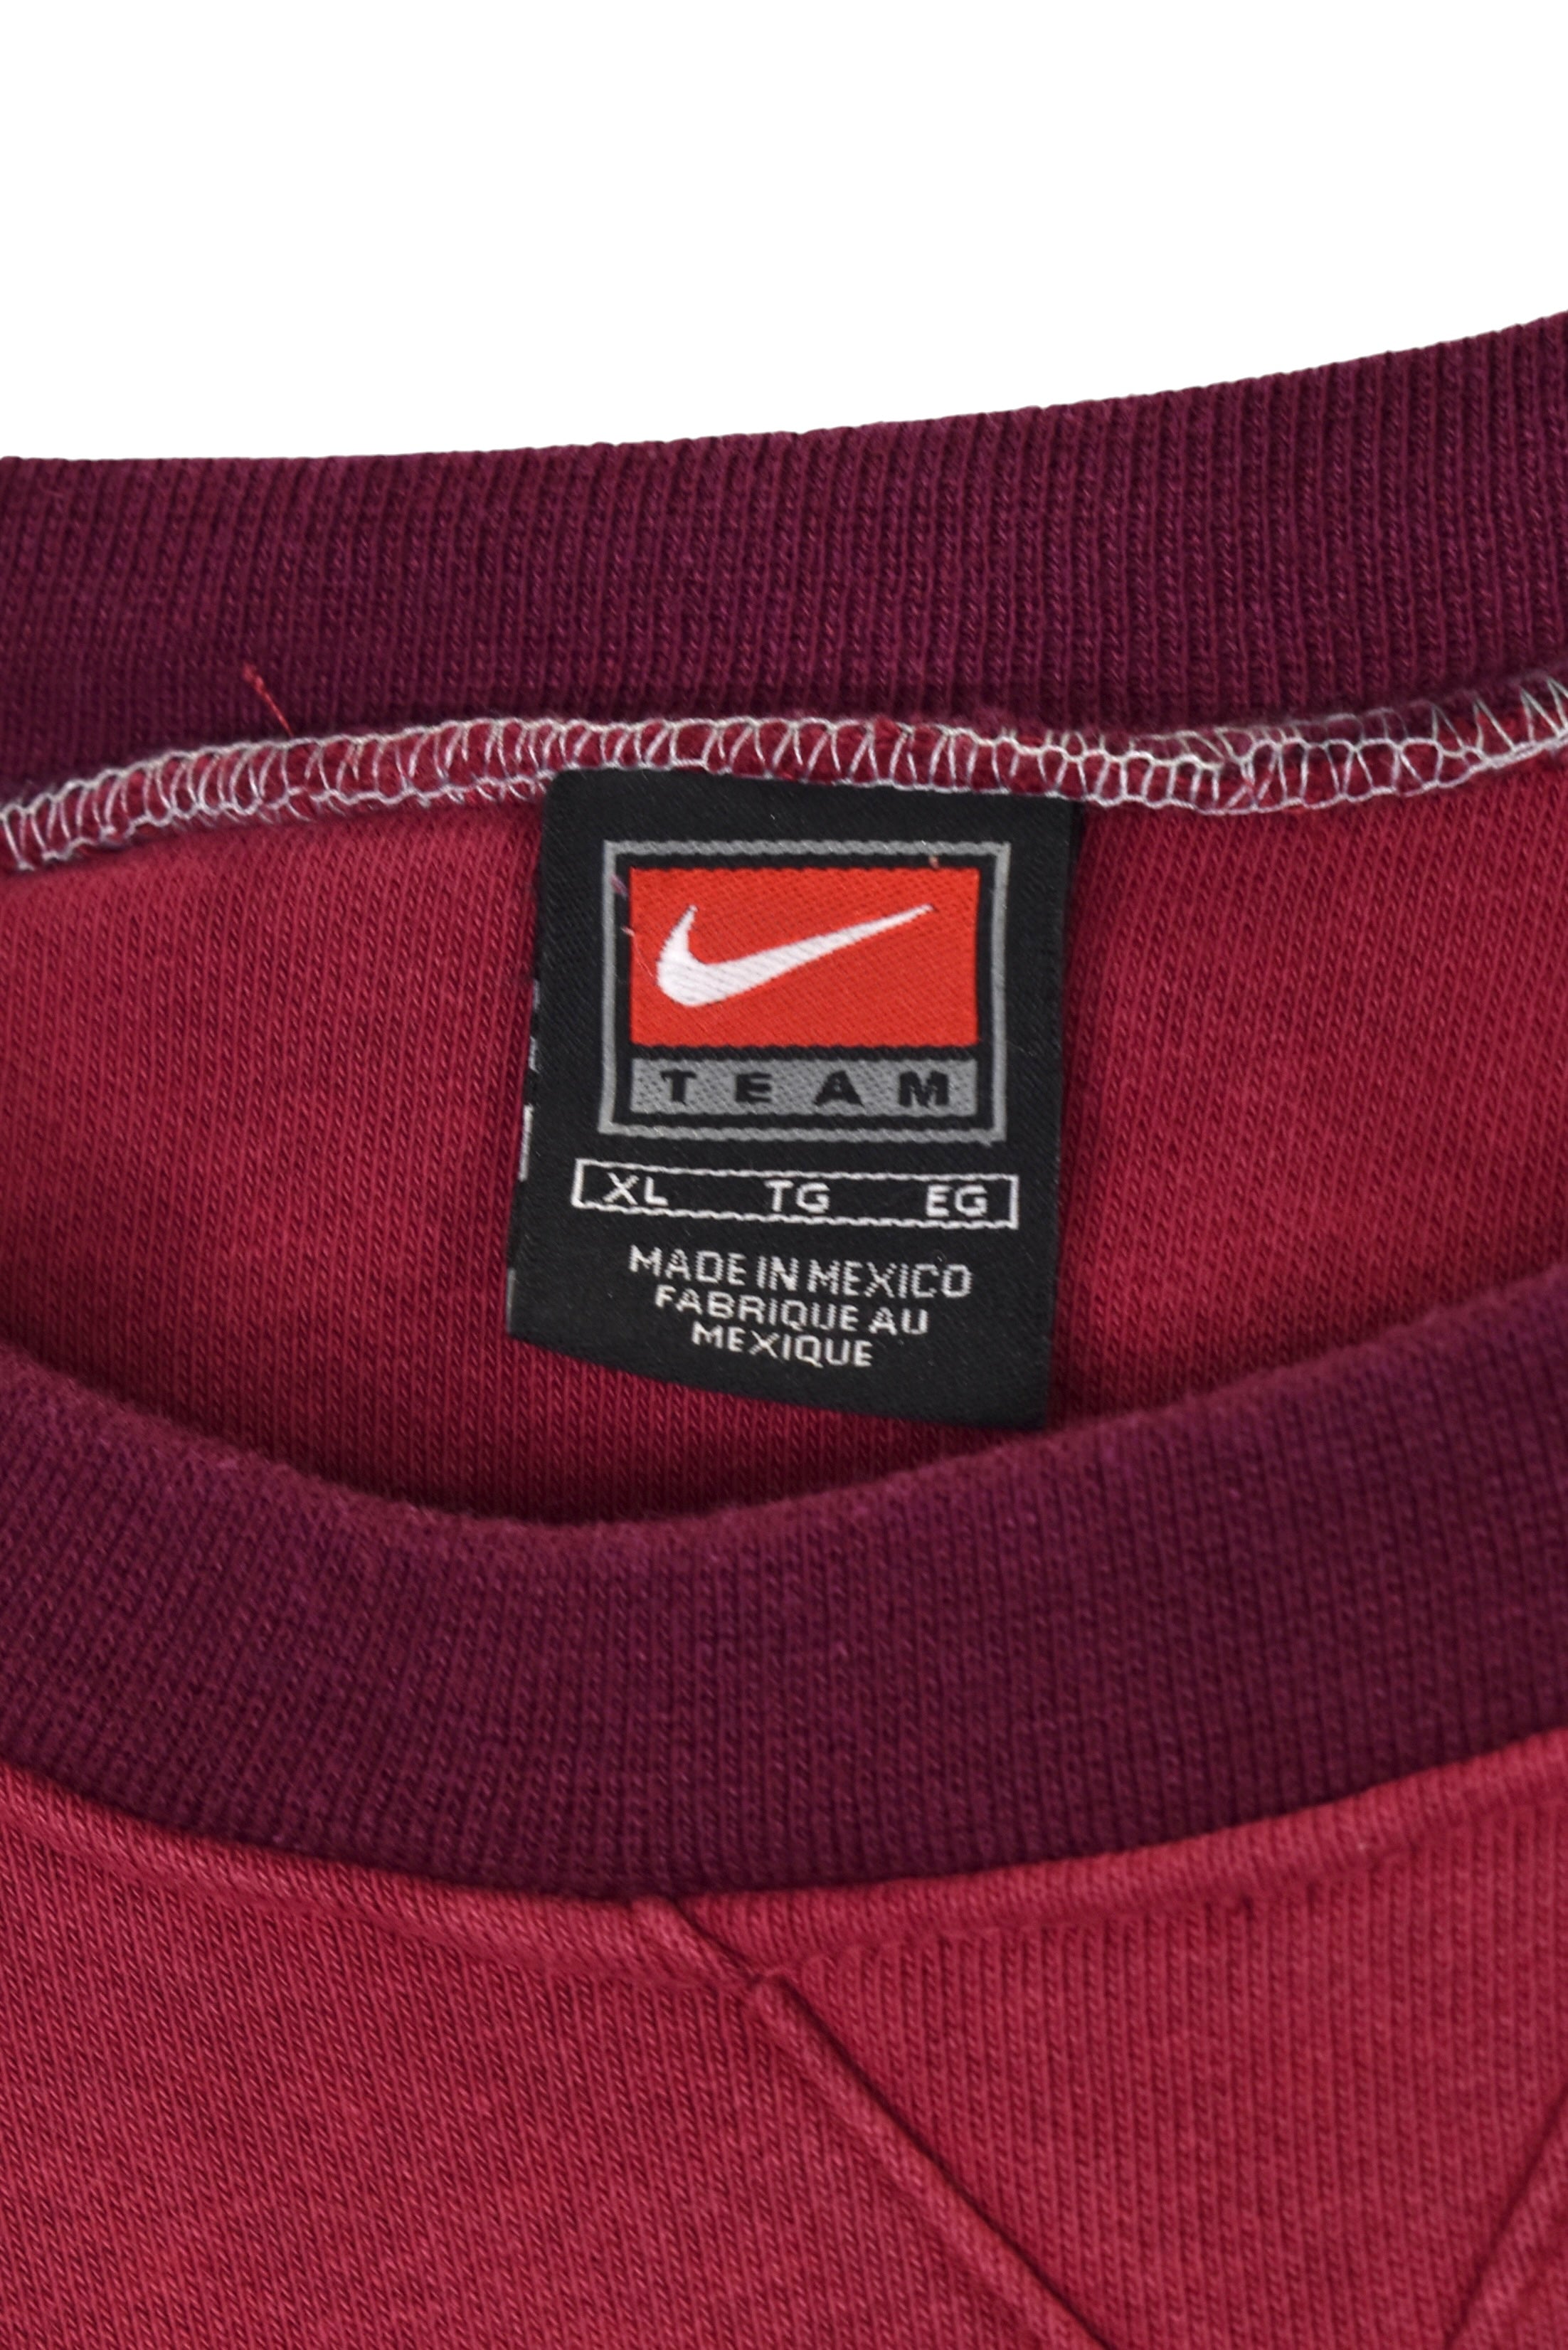 Vintage Nike Air sweatshirt, burgundy embroidered crewneck - XL